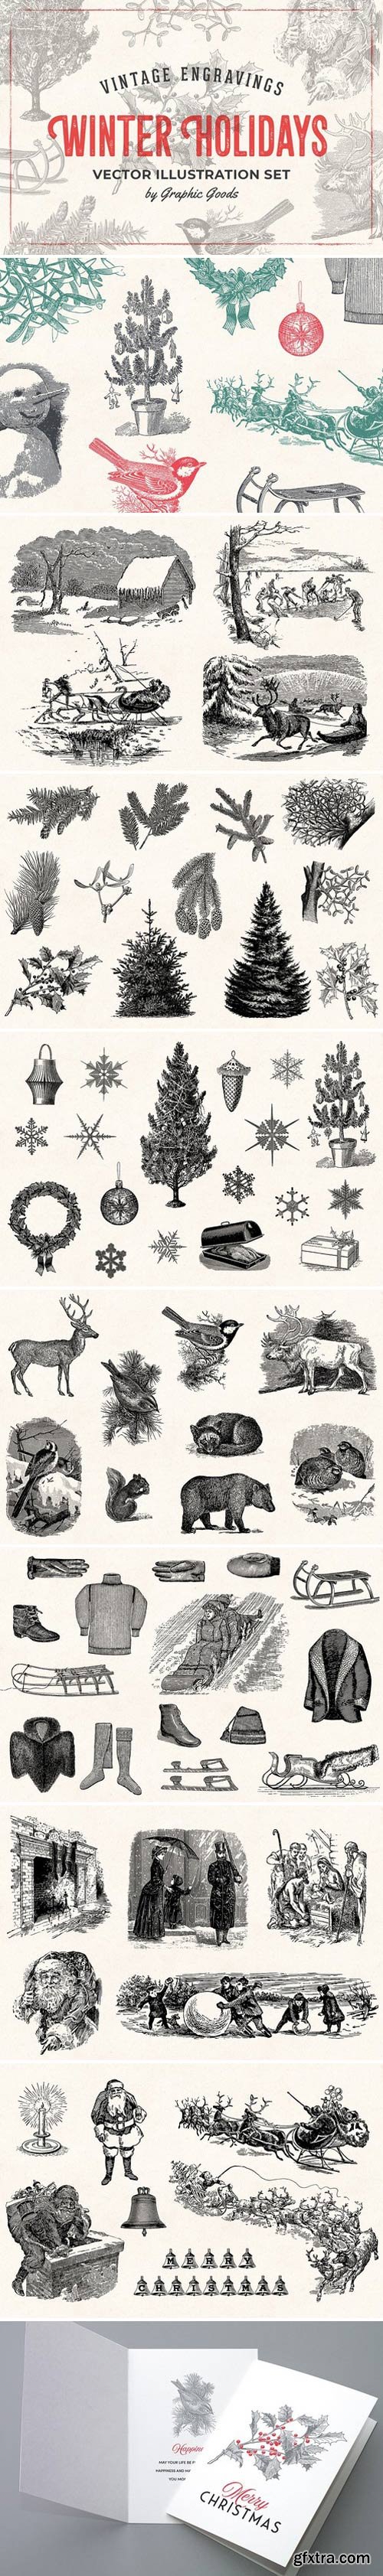 CM - Winter Holidays - Vintage Engravings 2057291